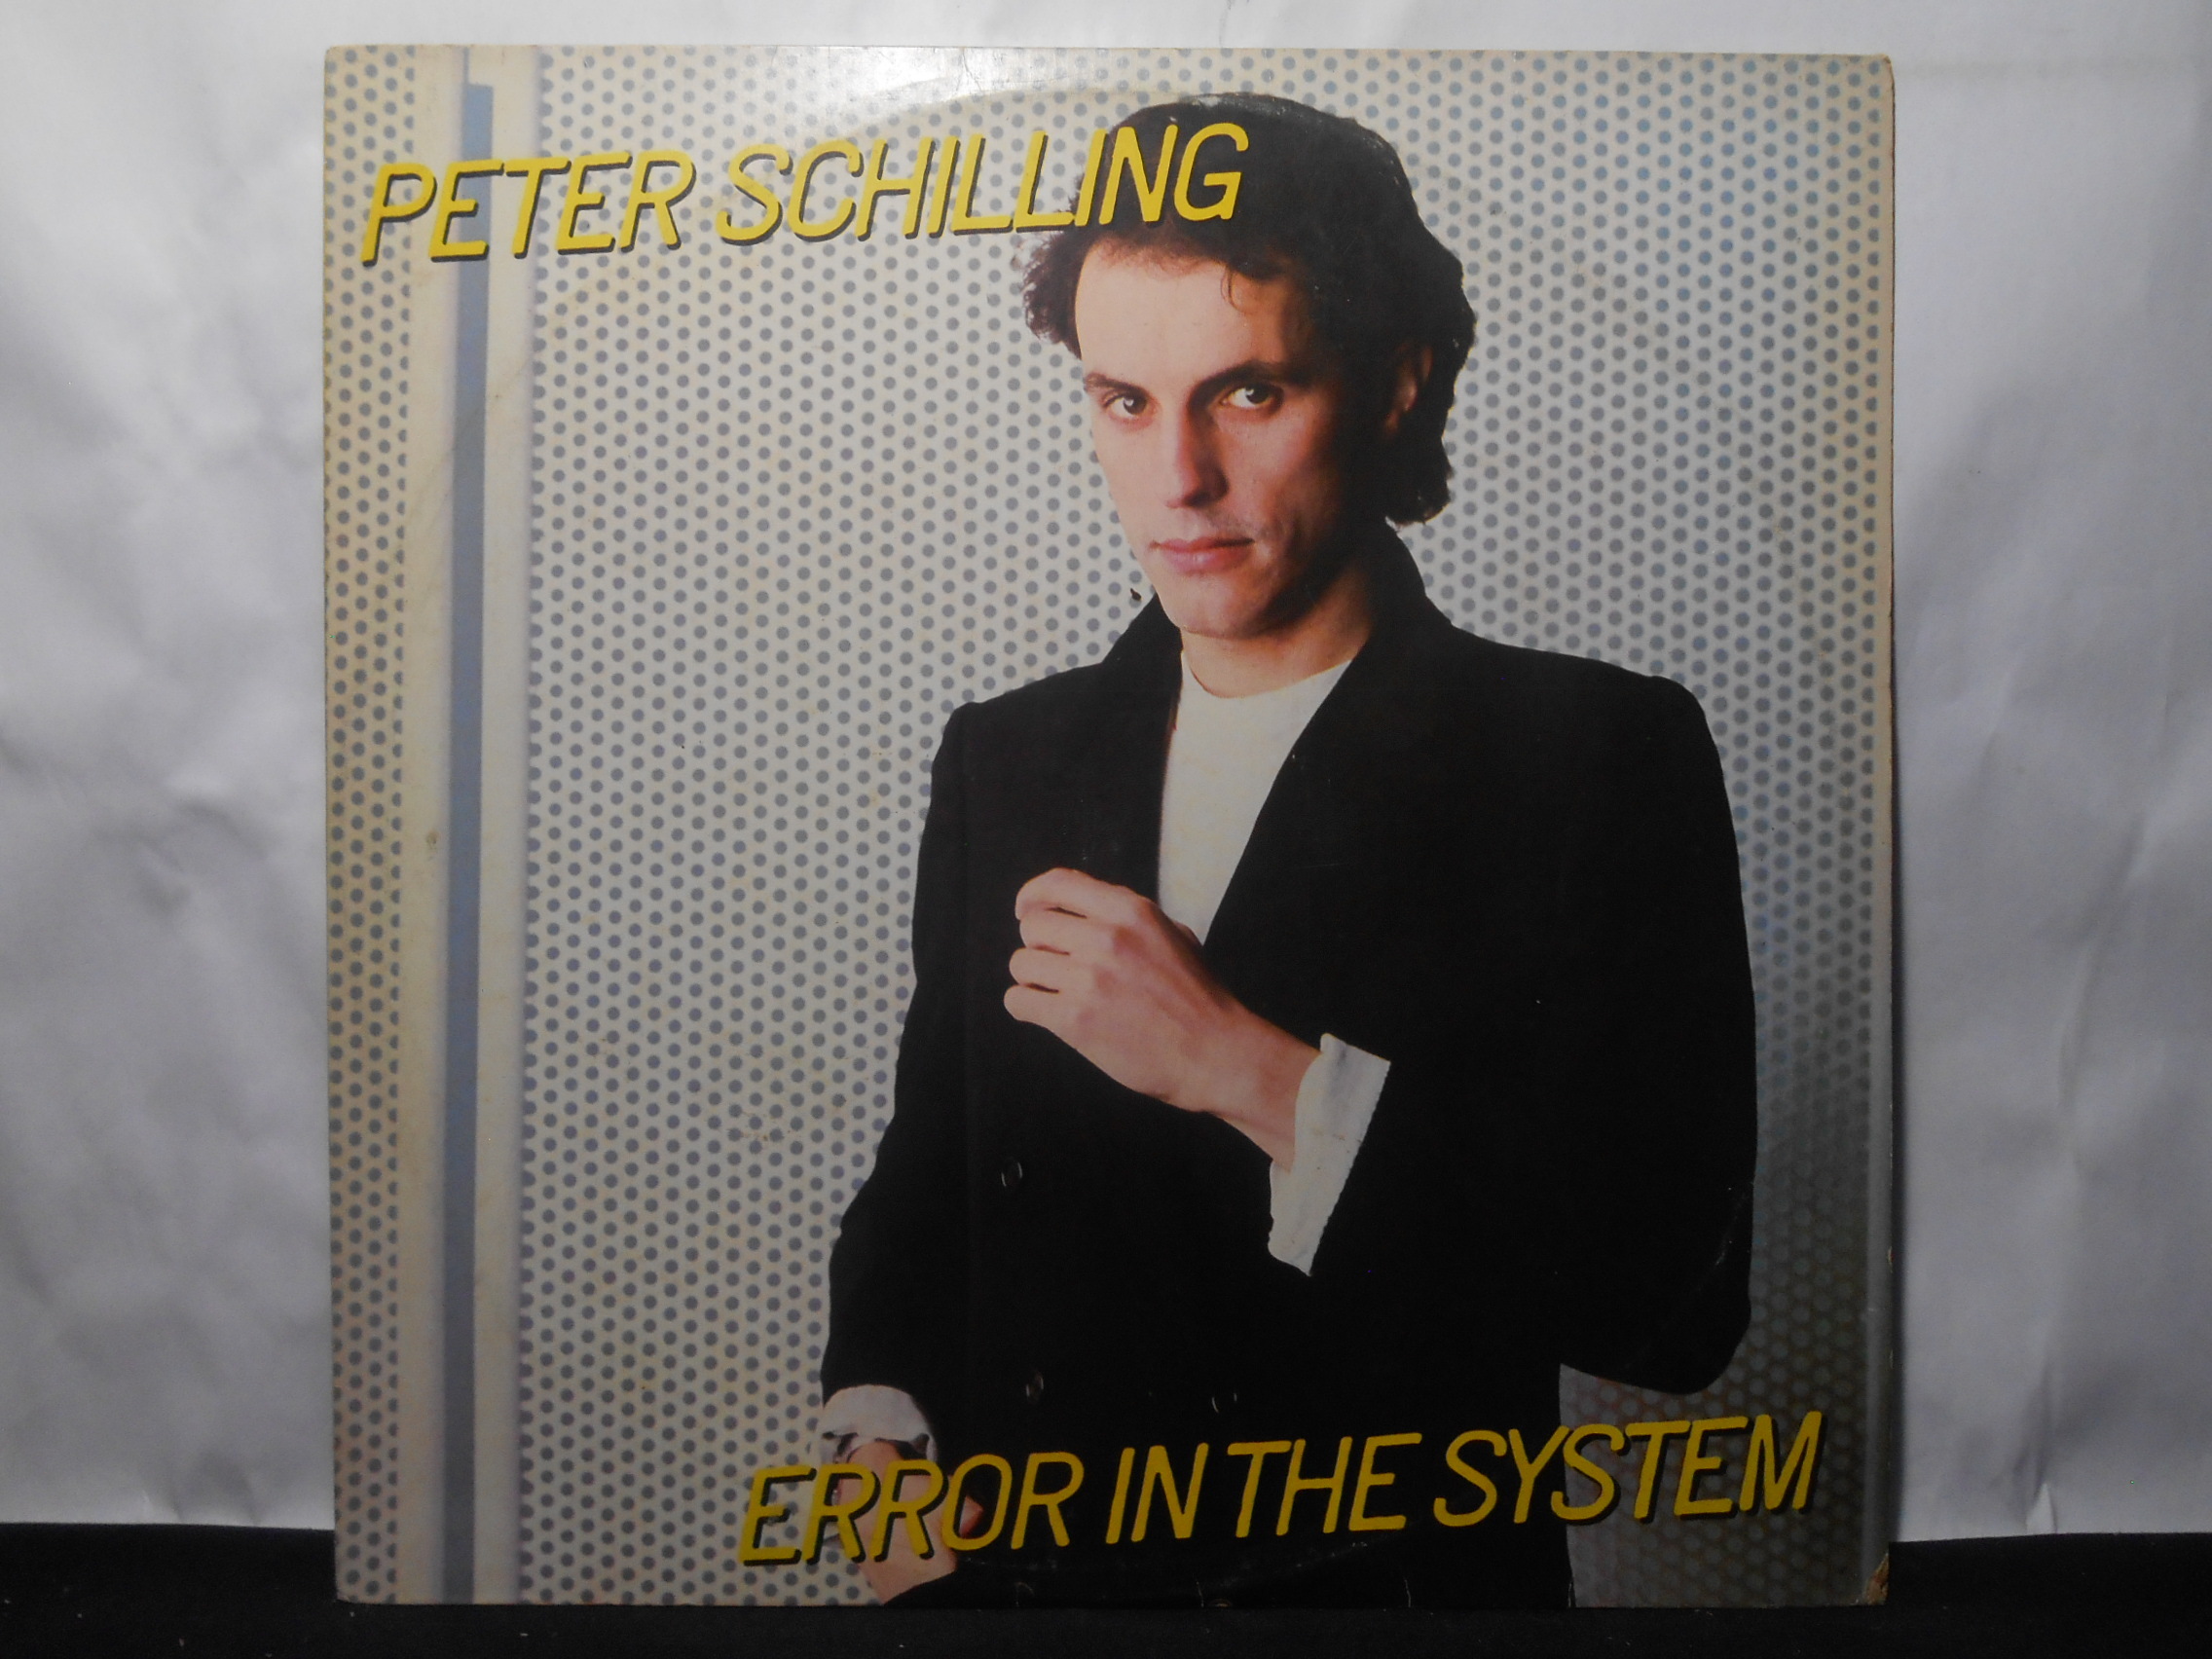 Vinil - Peter Schilling - Error In The System